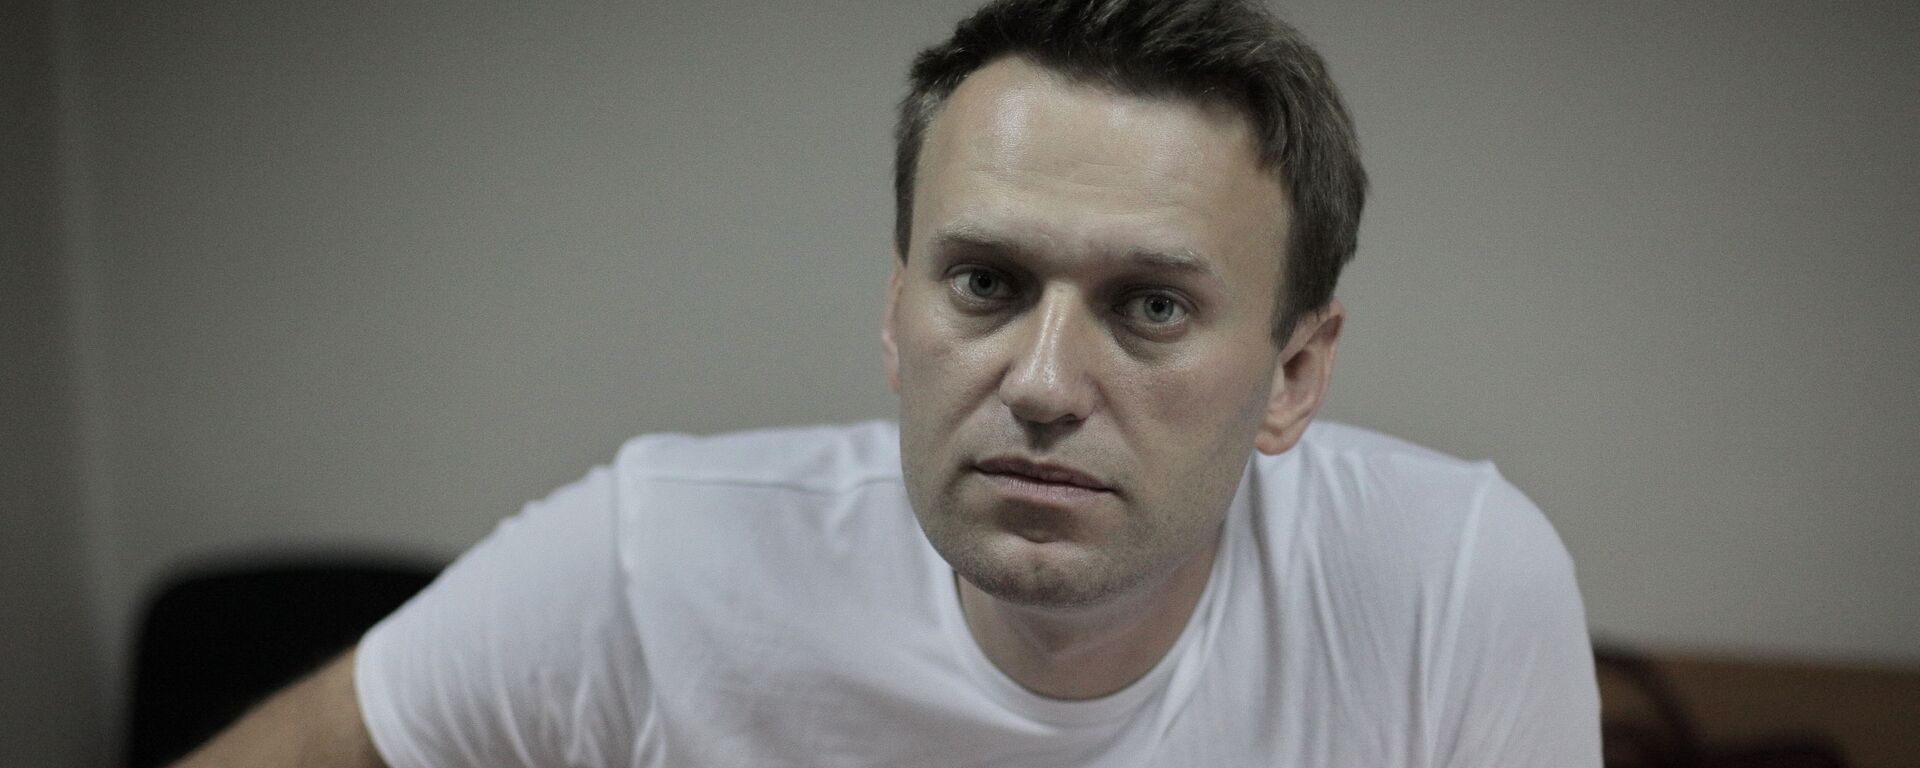 Alexéi Navalni, opositor ruso - Sputnik Mundo, 1920, 22.12.2020